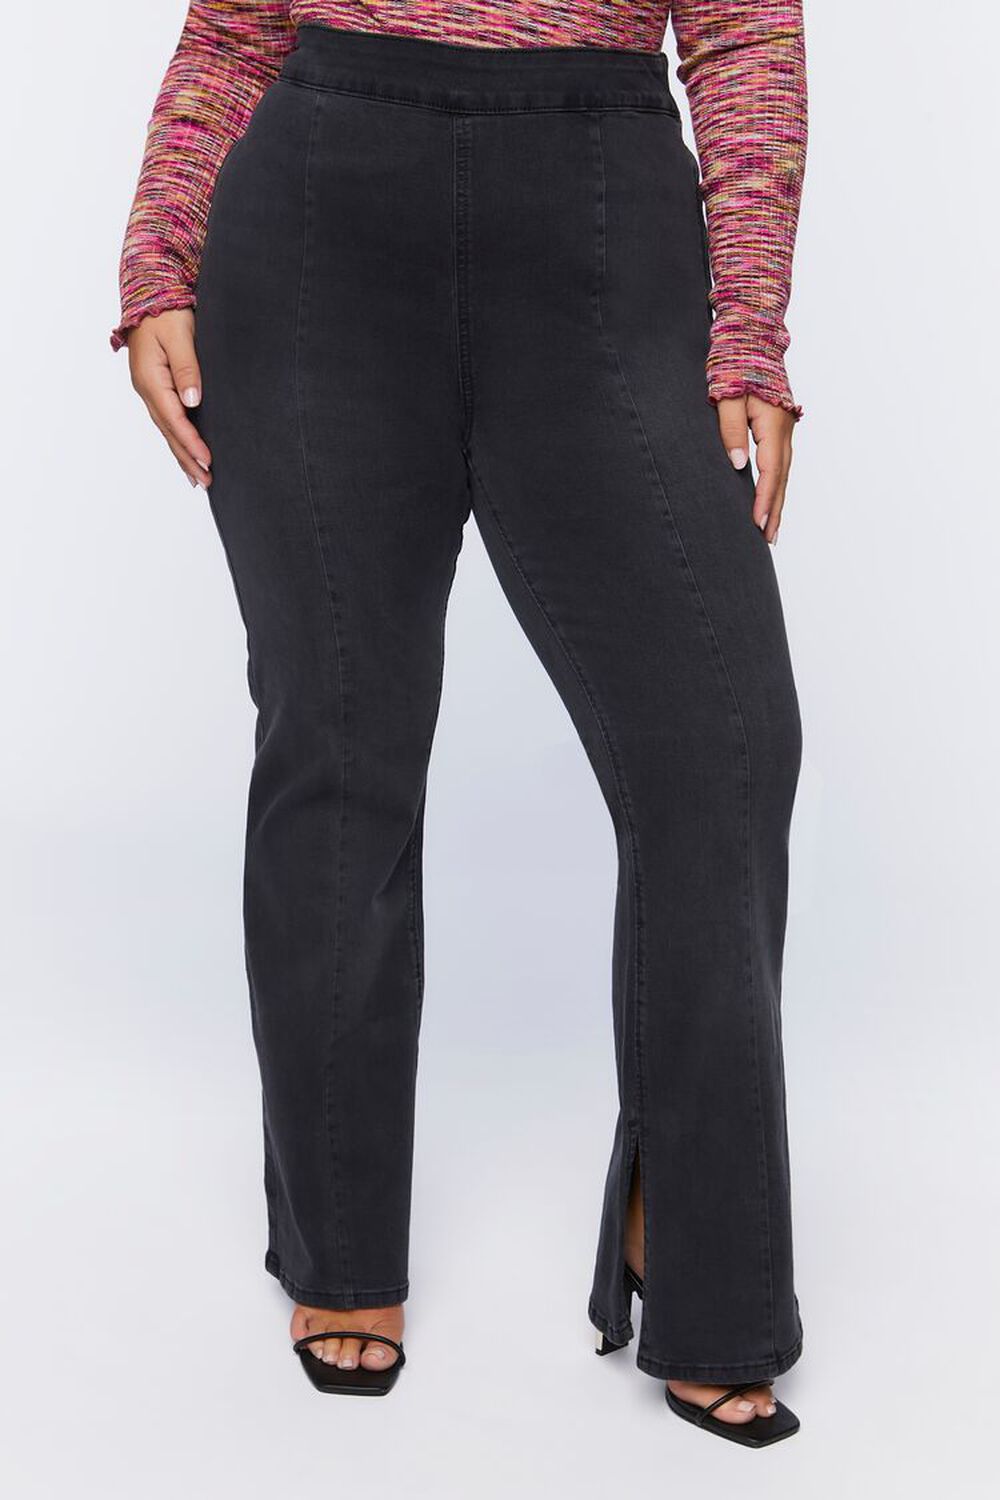 BLACK Plus Size High-Rise Split Flare Jeans, image 2